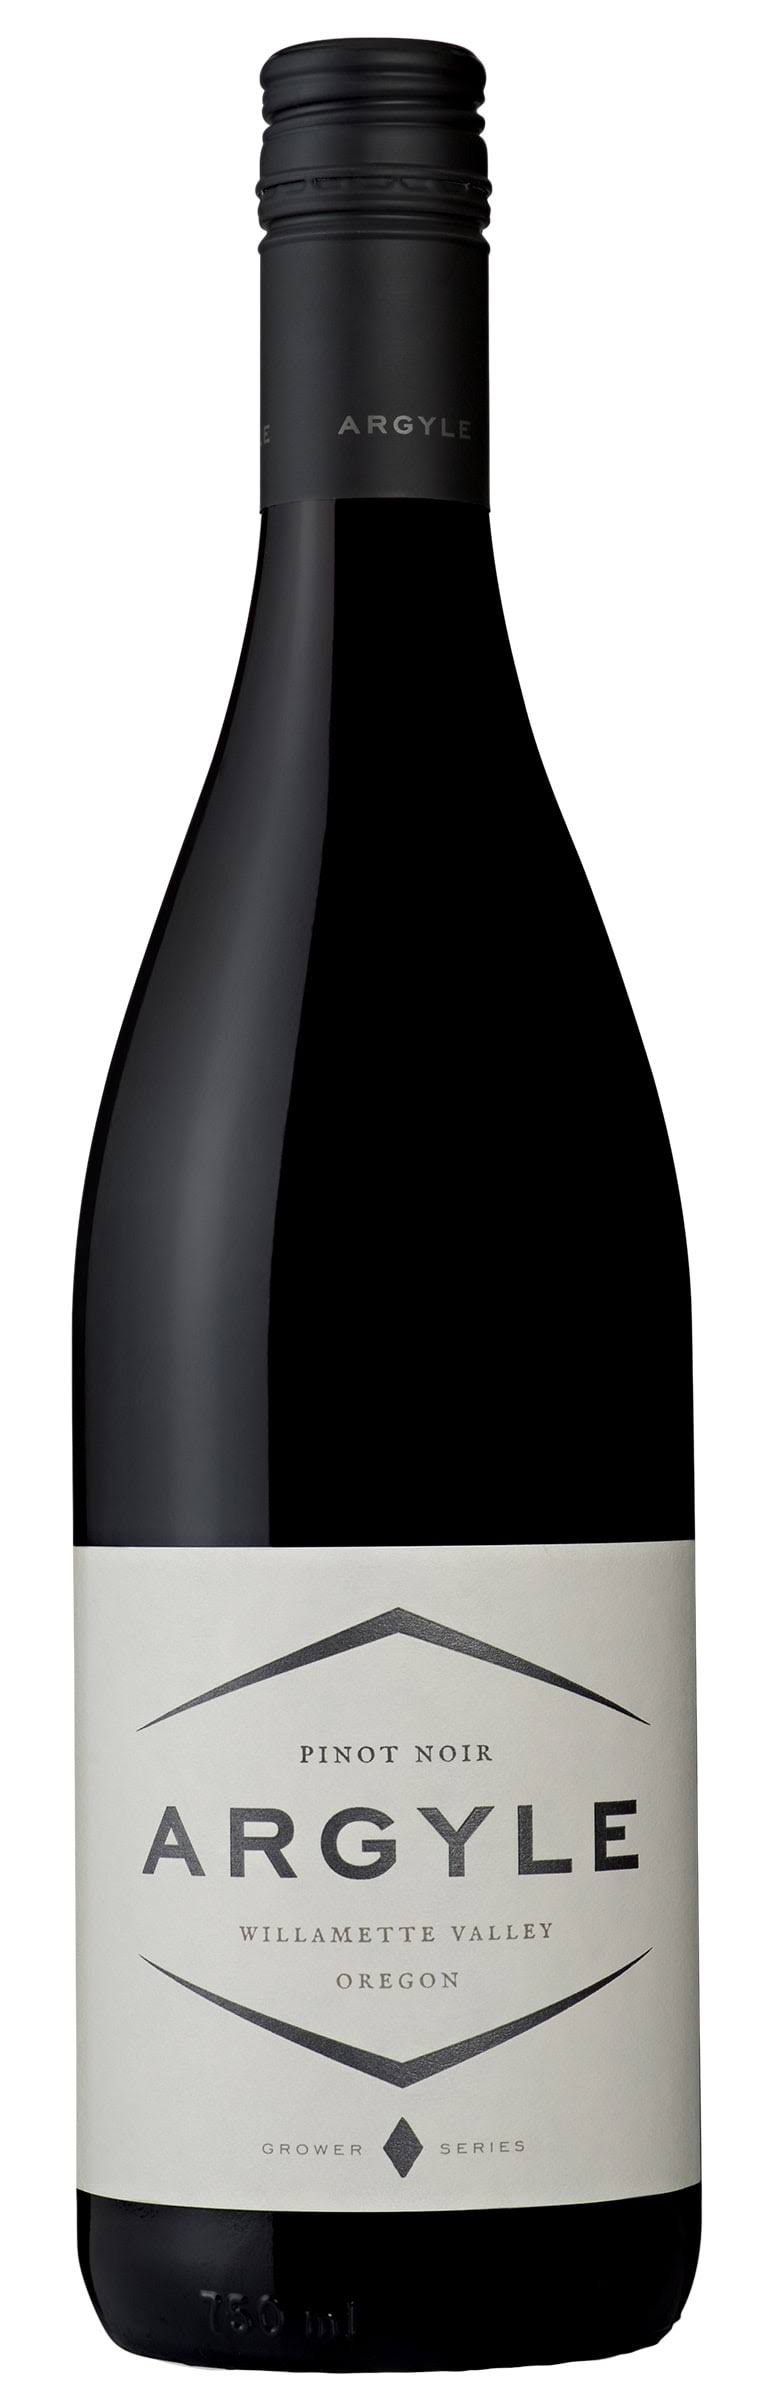 Argyle Pinot Noir Willamette Valley, 2011